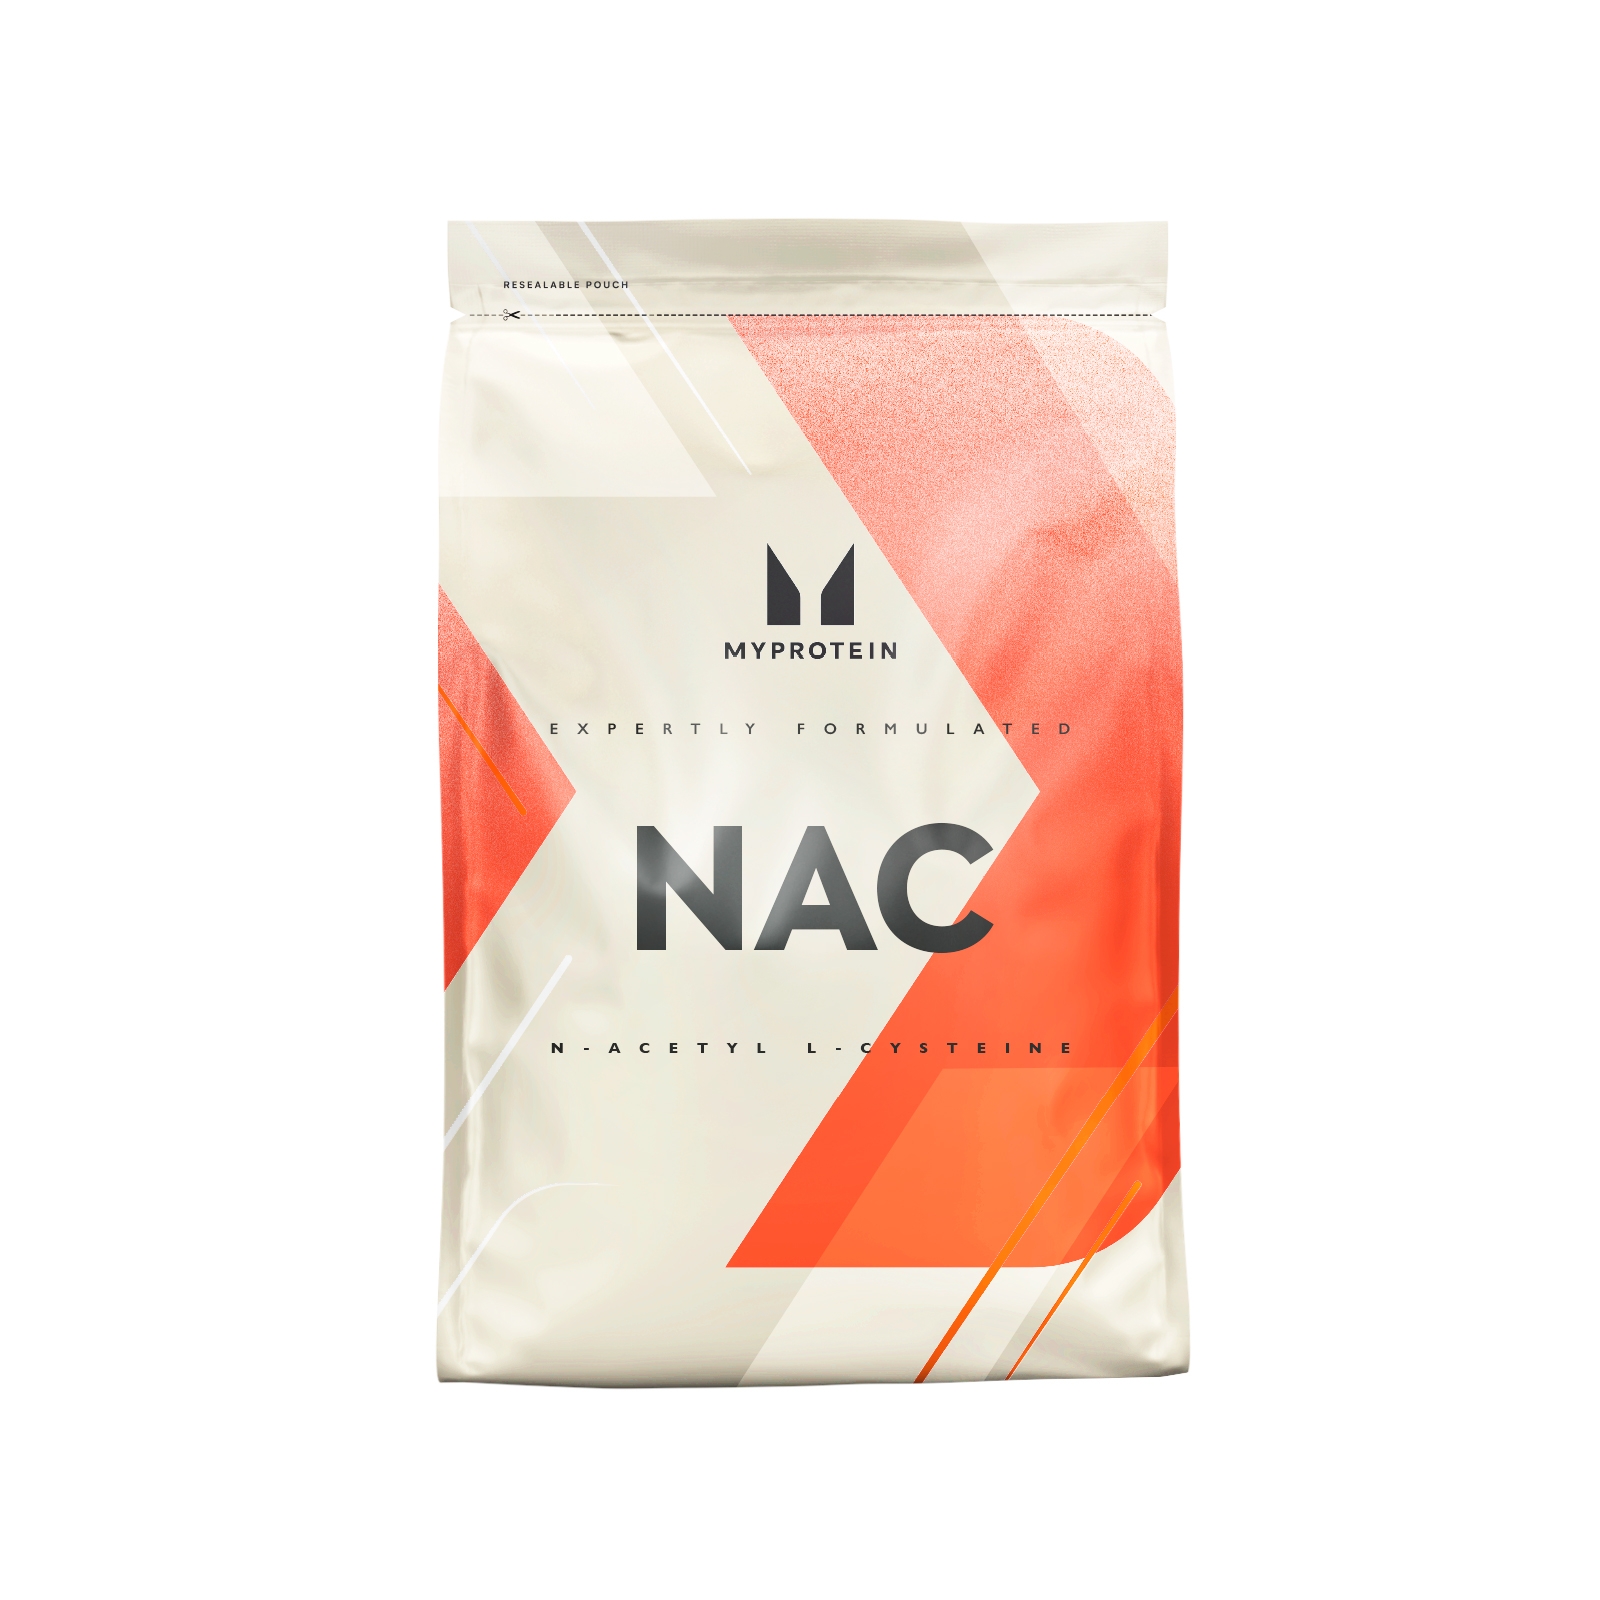 100% NAC Amino Acid